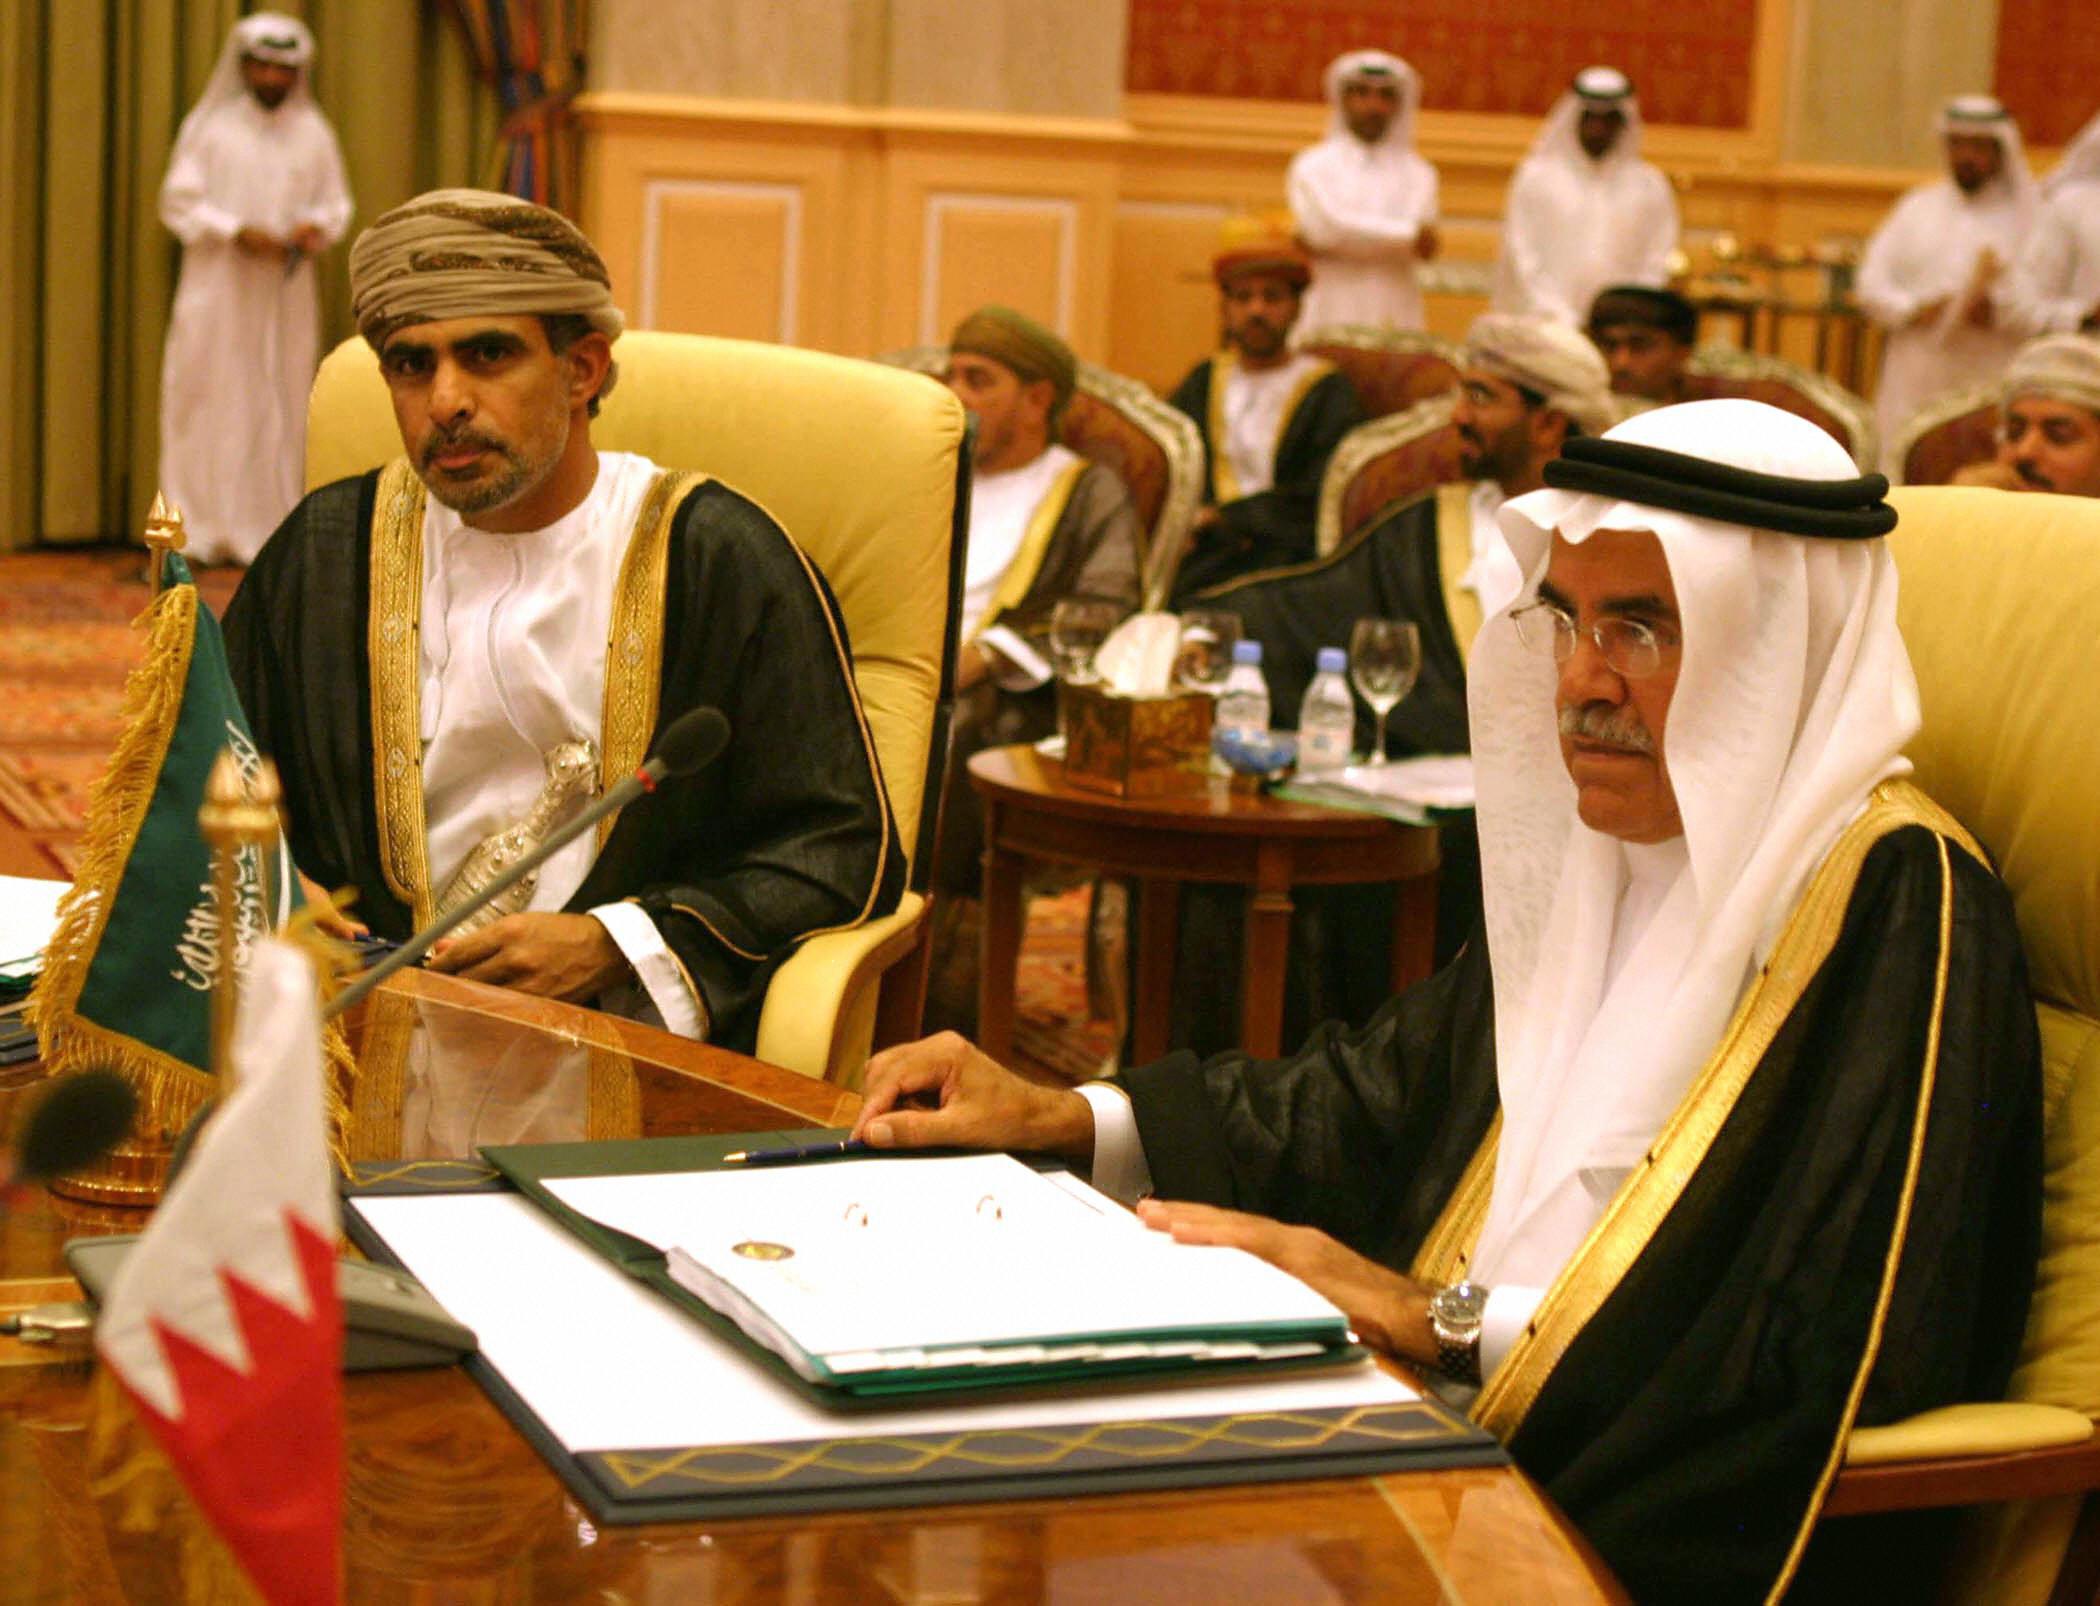 Saudi's Oil Minister Ali al-Nuaimi, right, sits next to Oman's Oil and Gas minister Mohammad bin Hamad bin Saif al-Romhi.